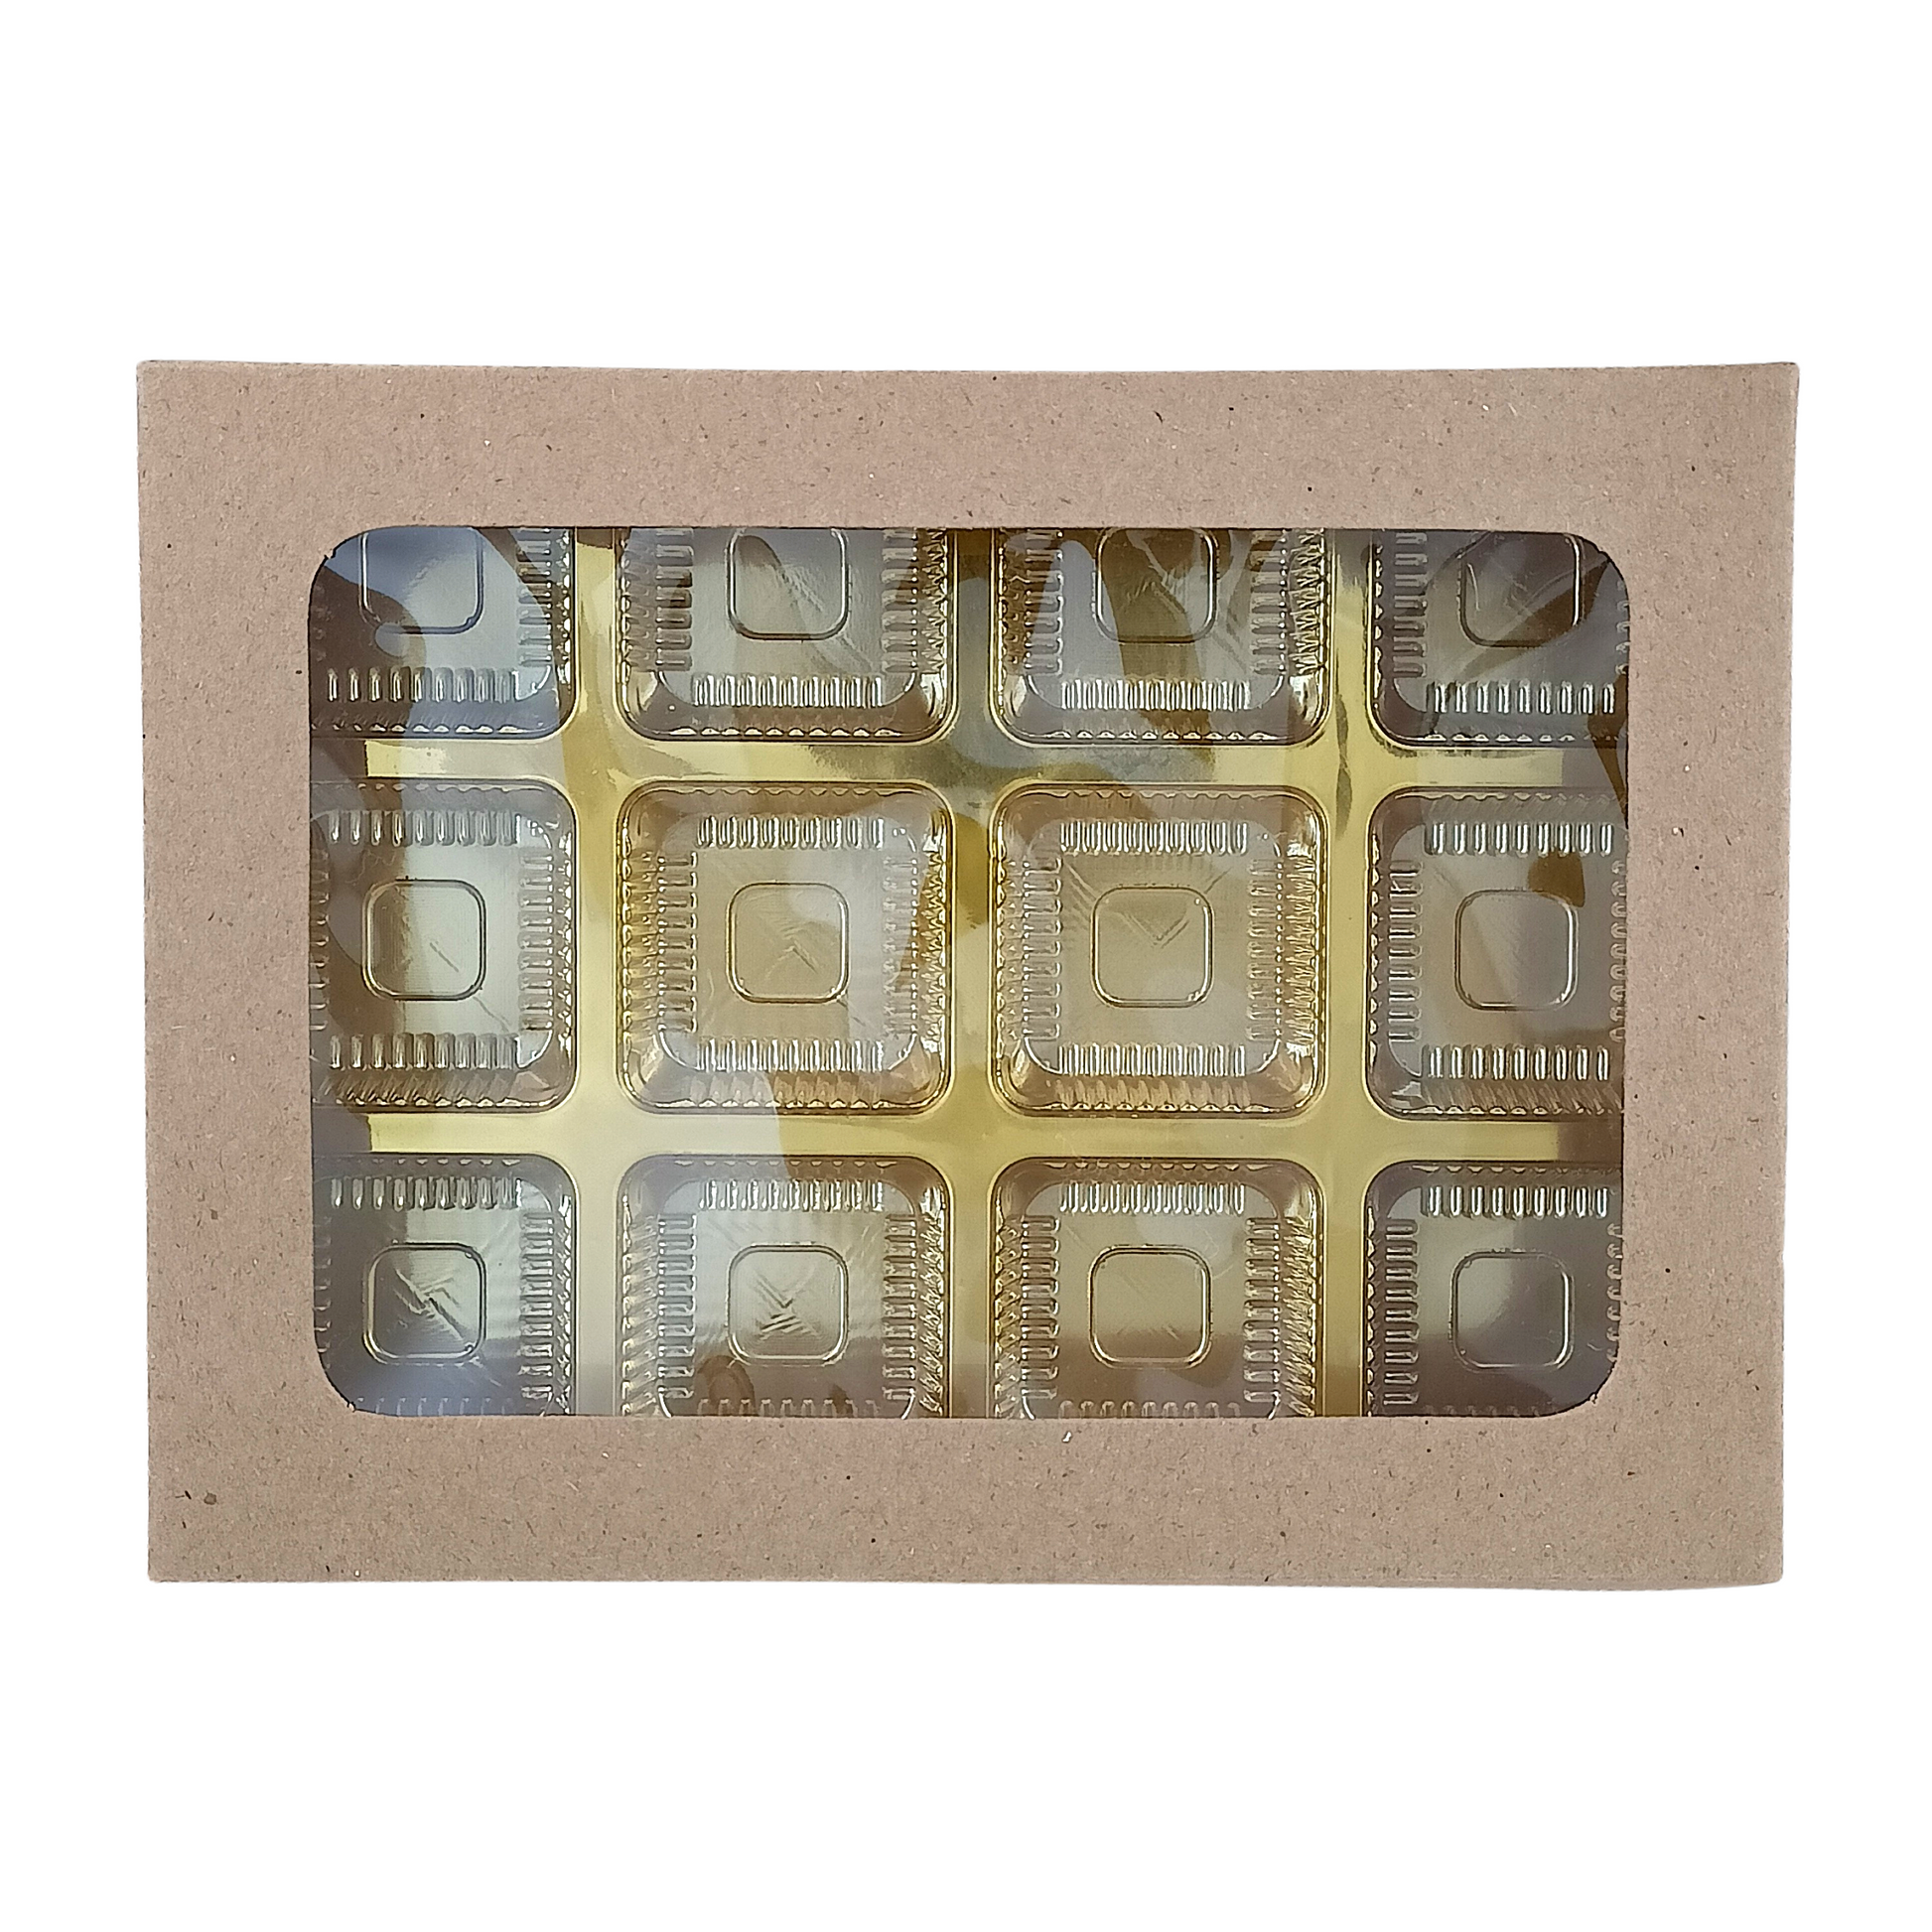 Chocolate Boxes 12 Cavity - Kraft - 7.5 x 5.5 x 1.25 inches Royal Box Shop